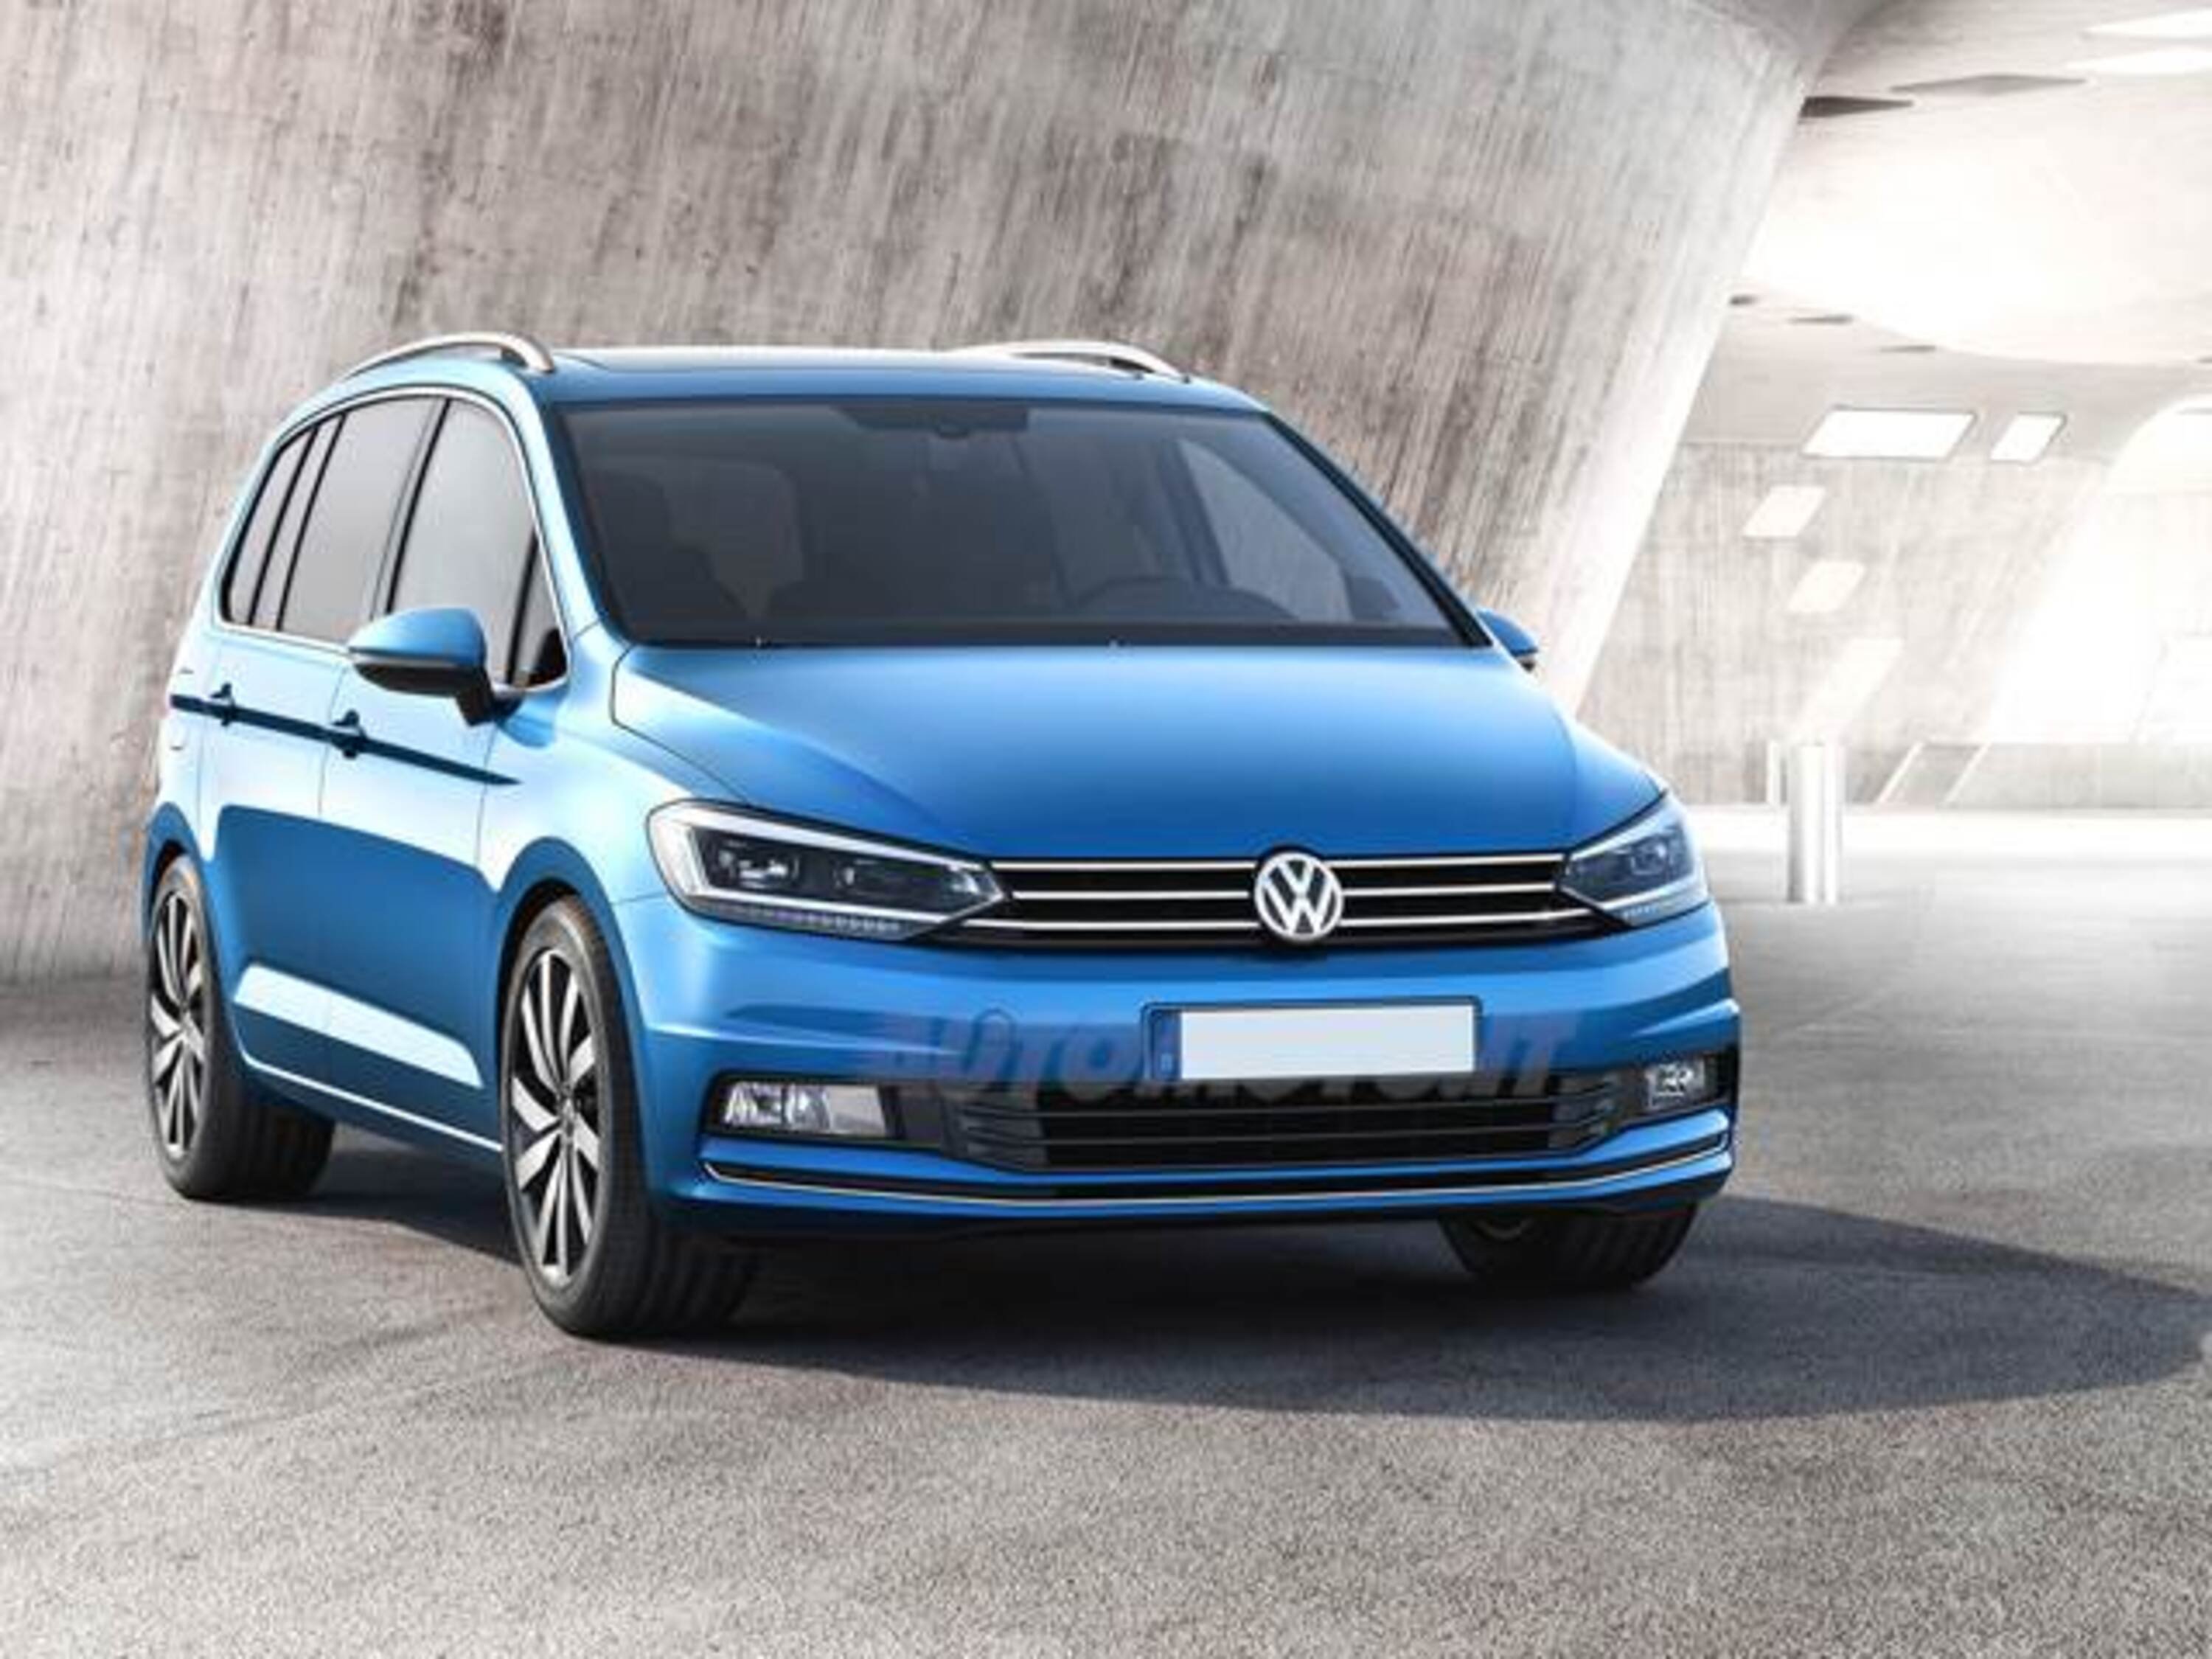 Volkswagen Touran 1.2 TSI Executive BlueMotion Technology